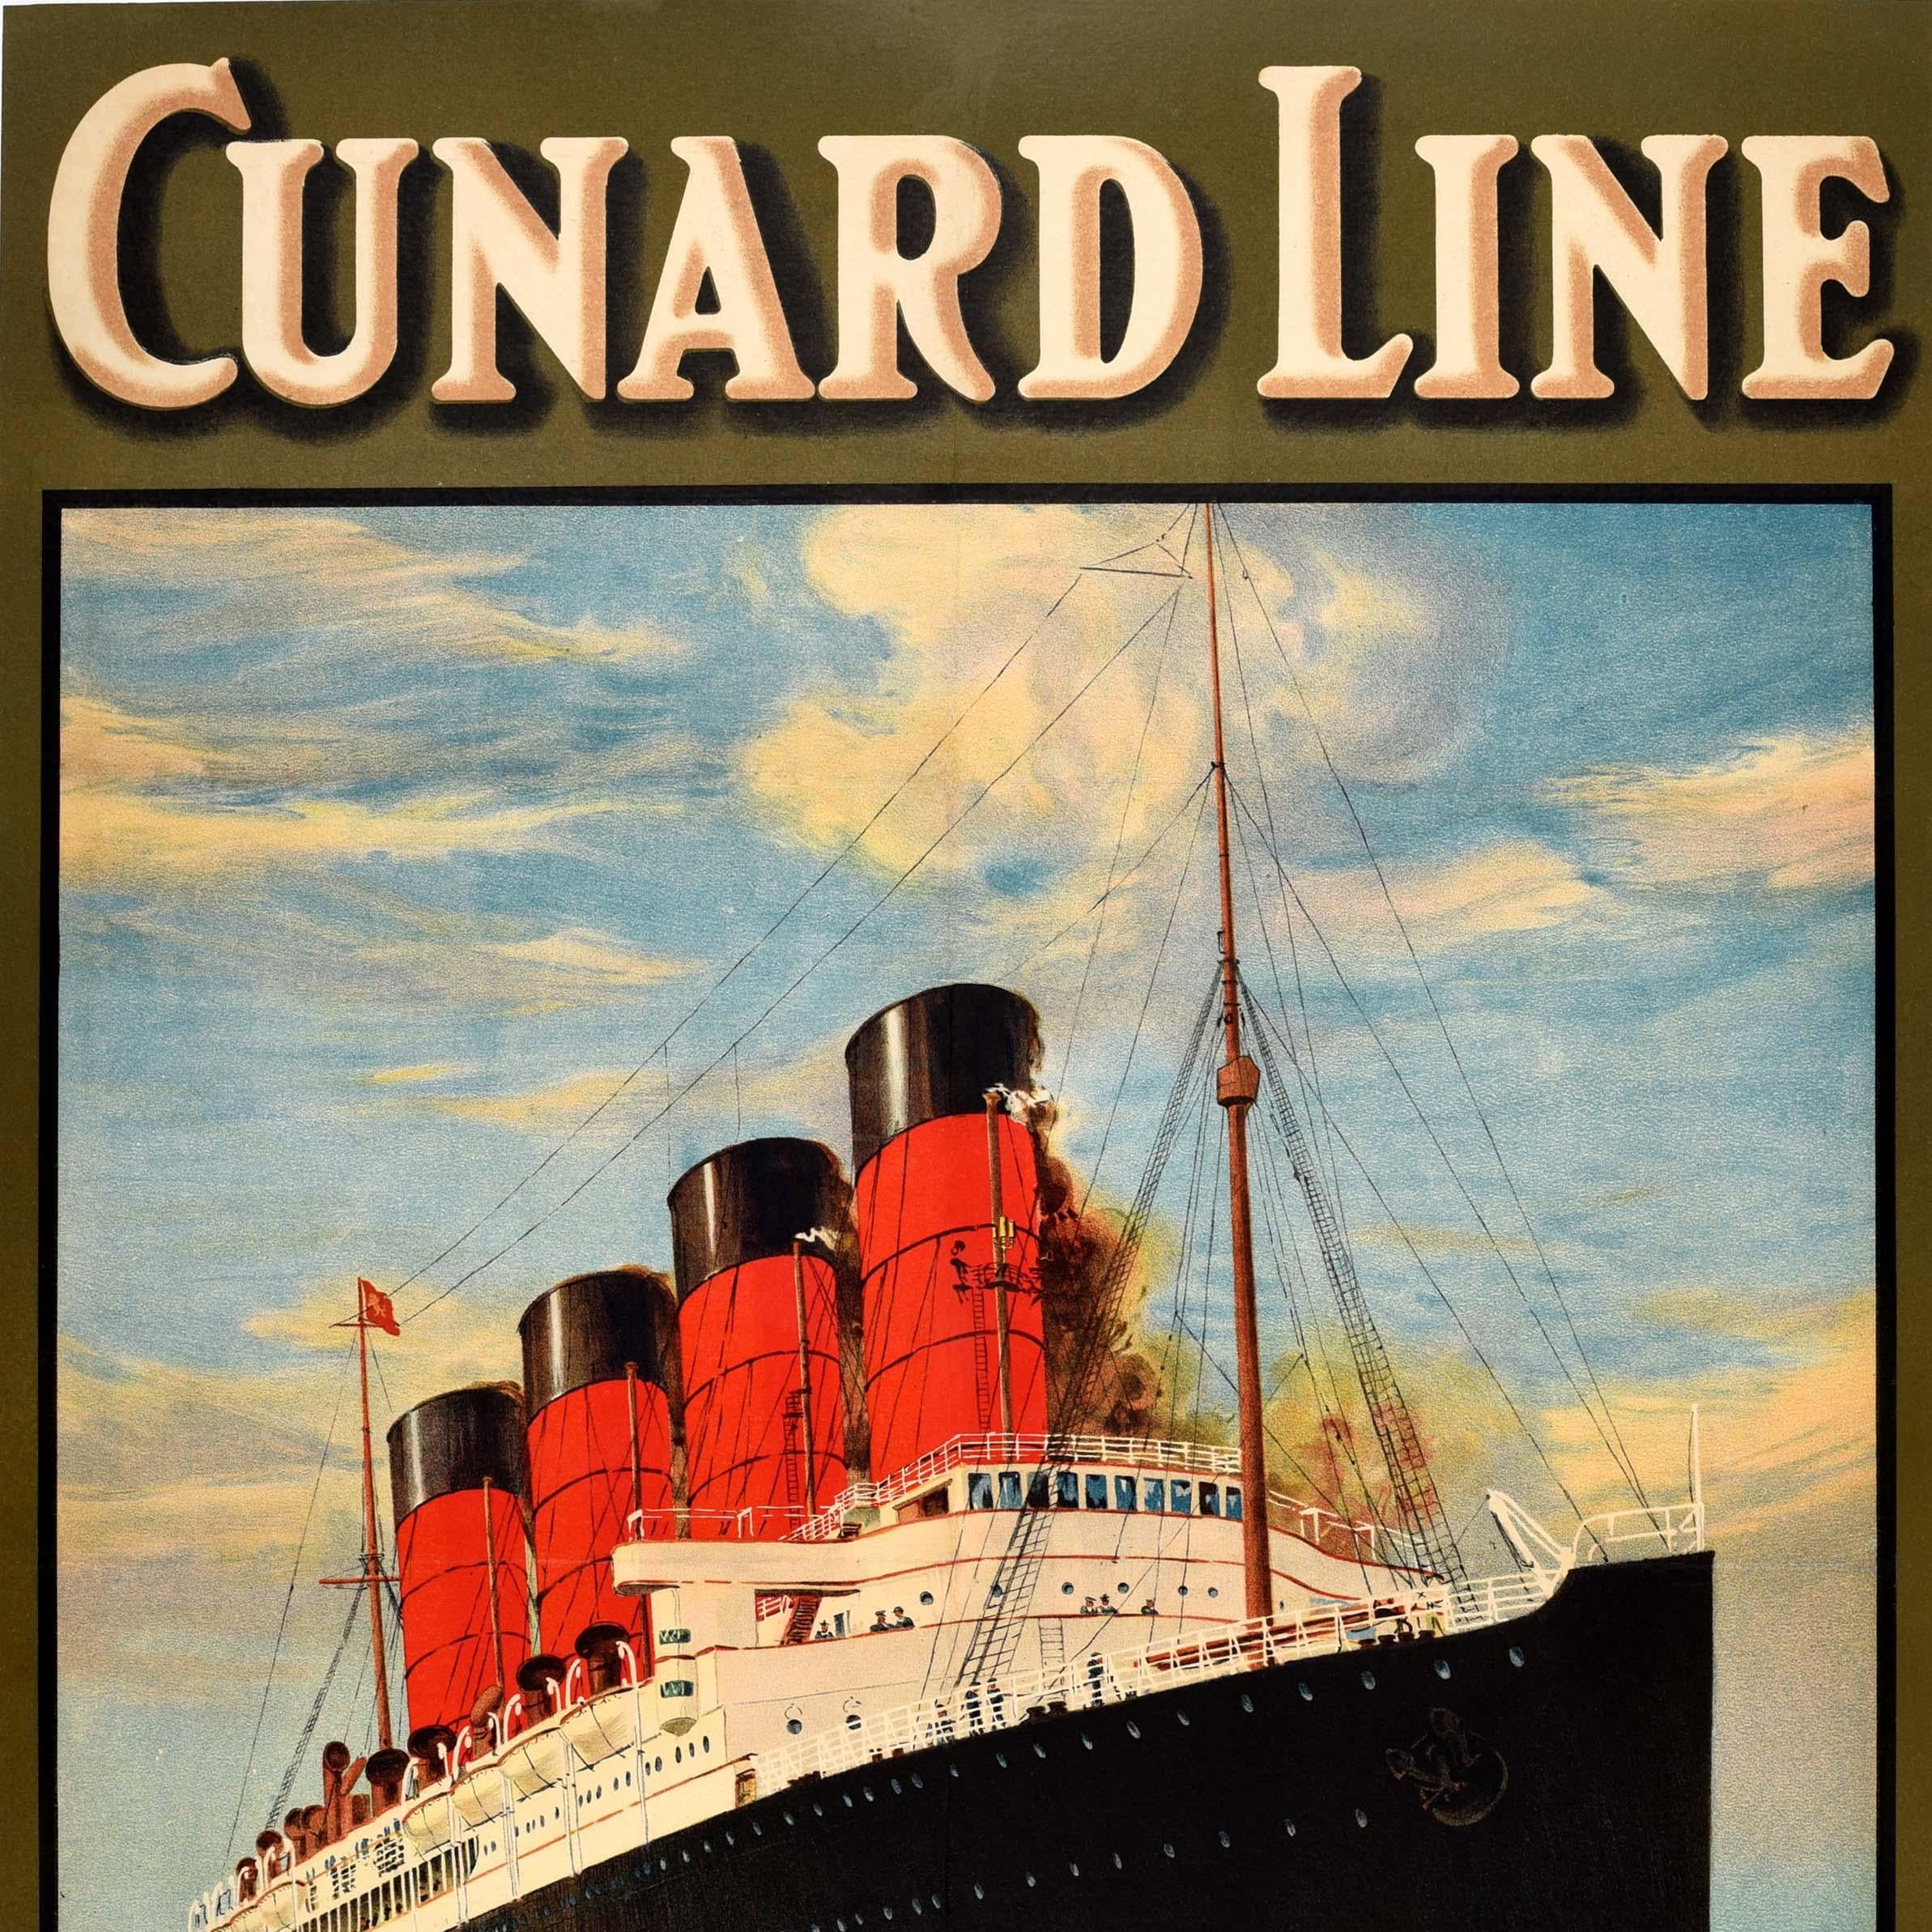 British Original Vintage Travel Advertising Poster Cunard Line Europe America Cruise For Sale